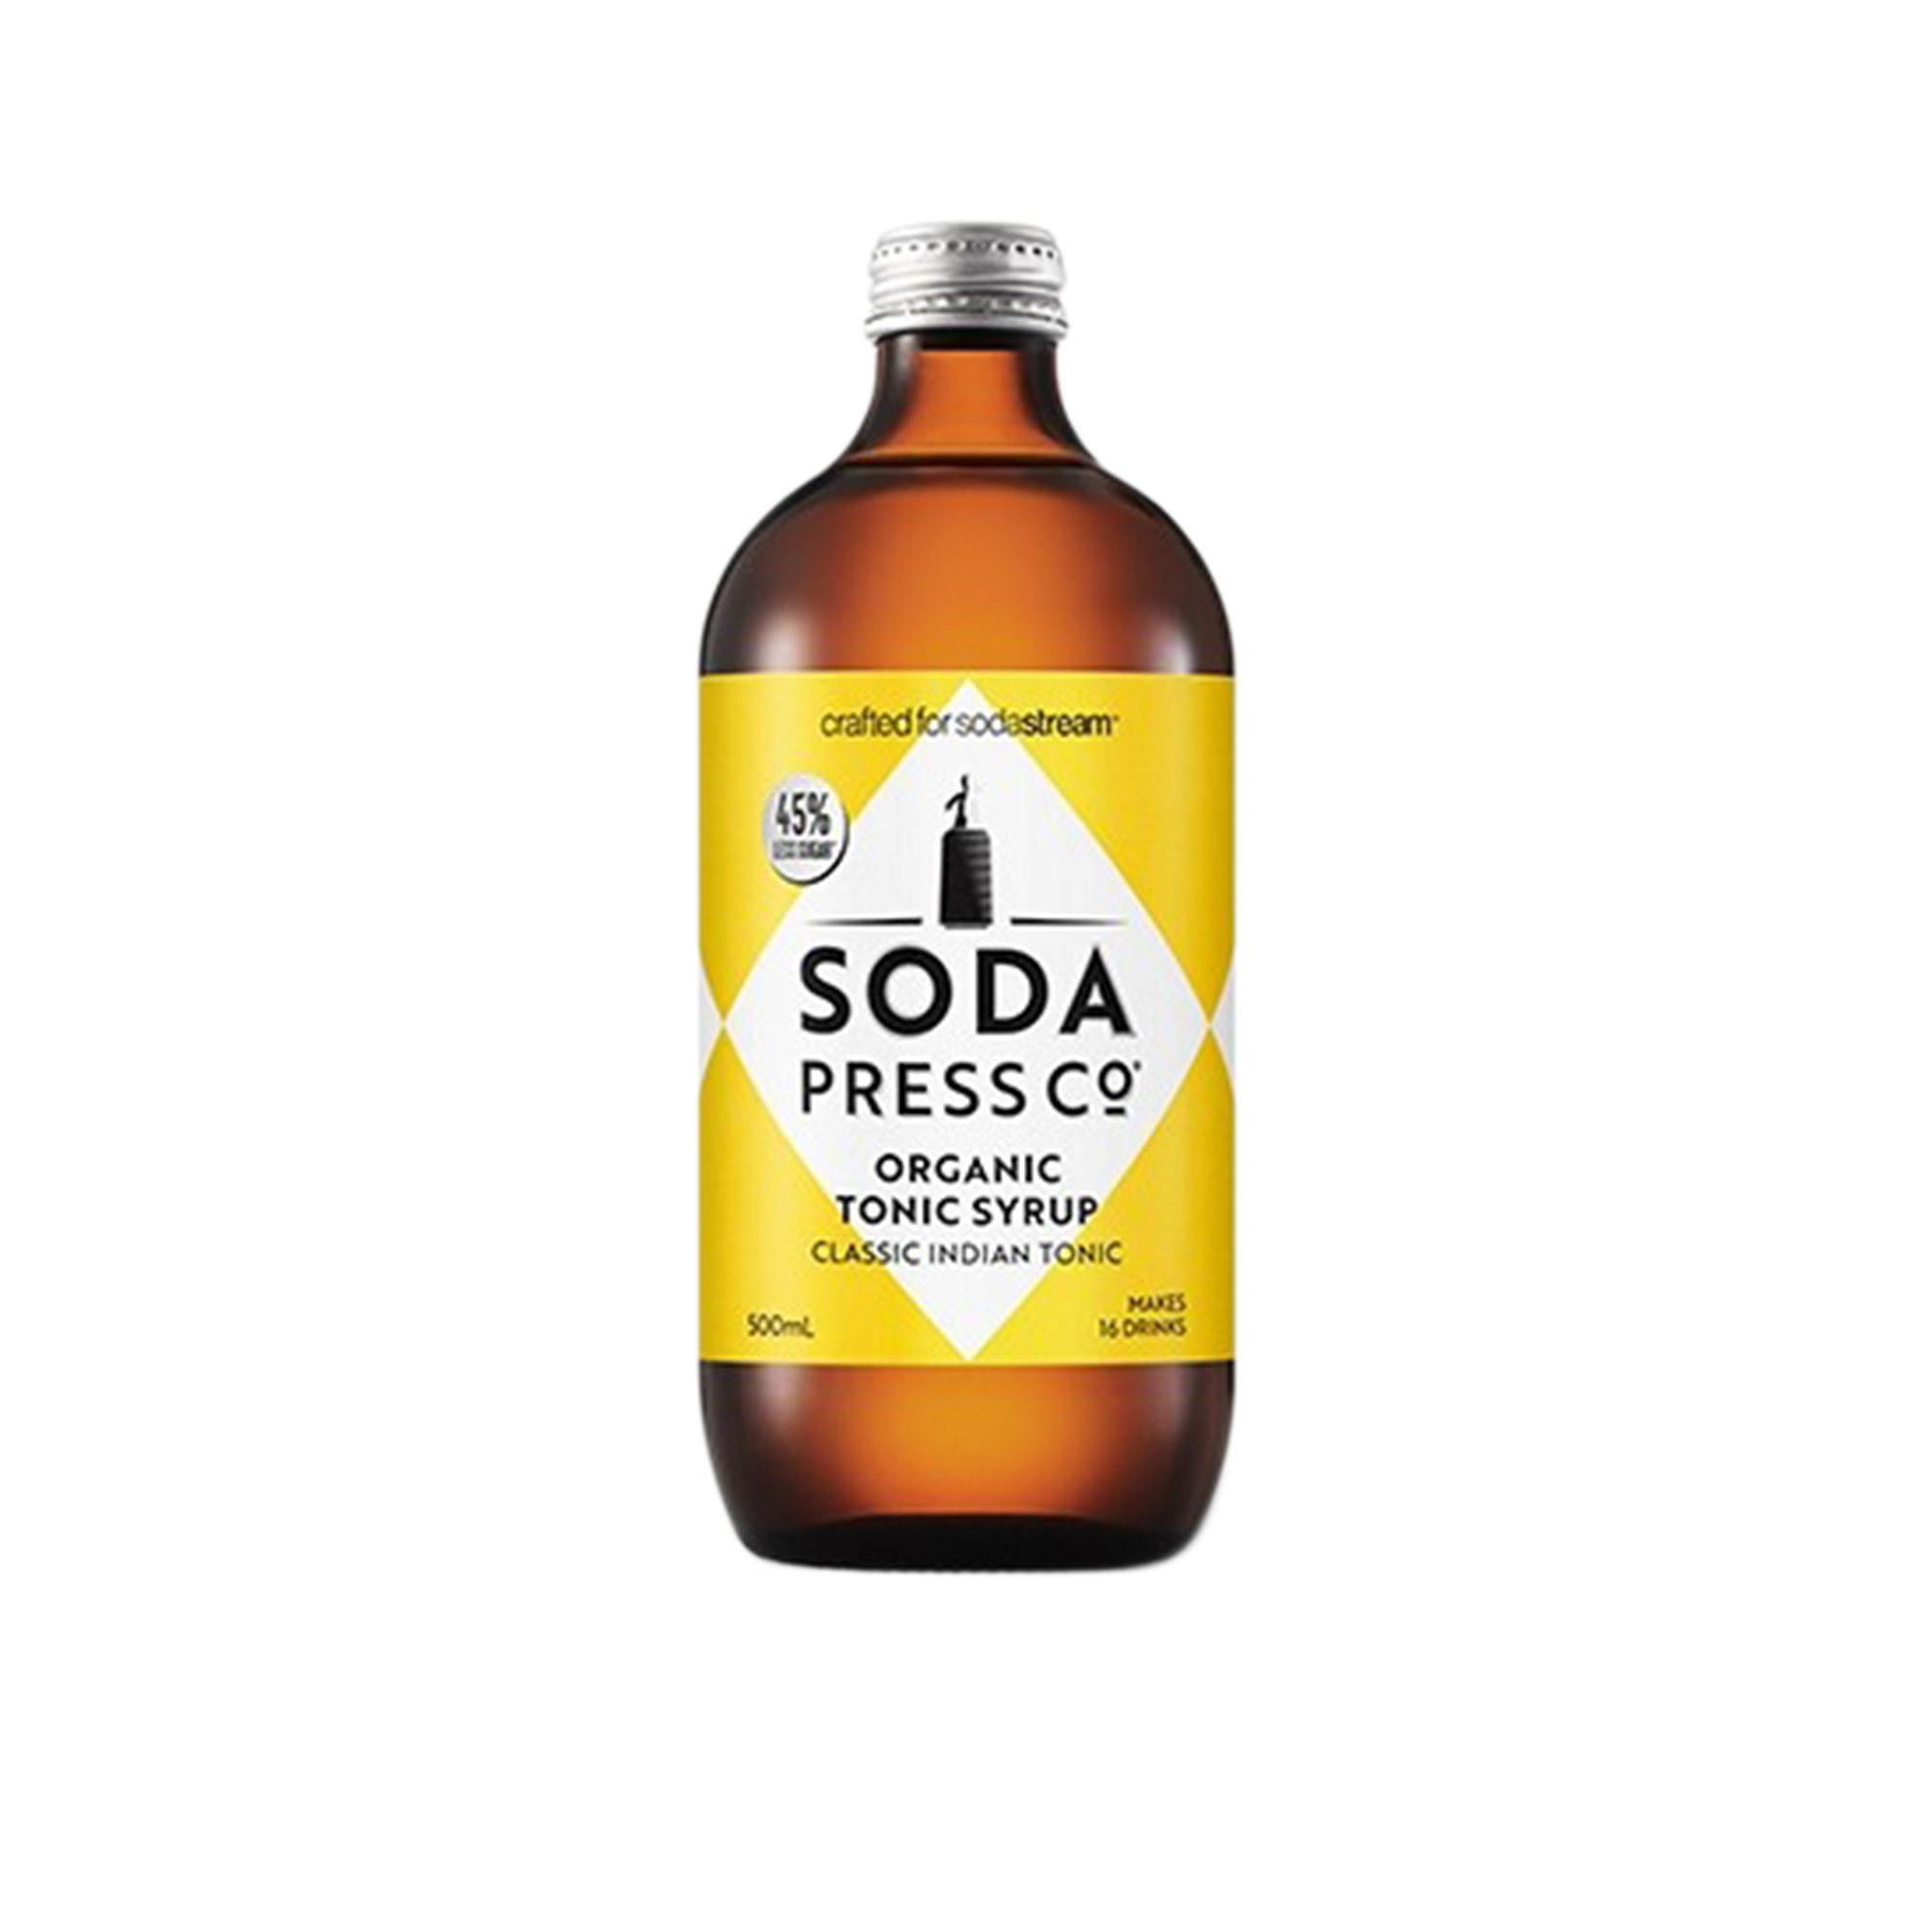 SodaStream Soda Press Co Organic Soda Syrup Indian Tonic Image 1